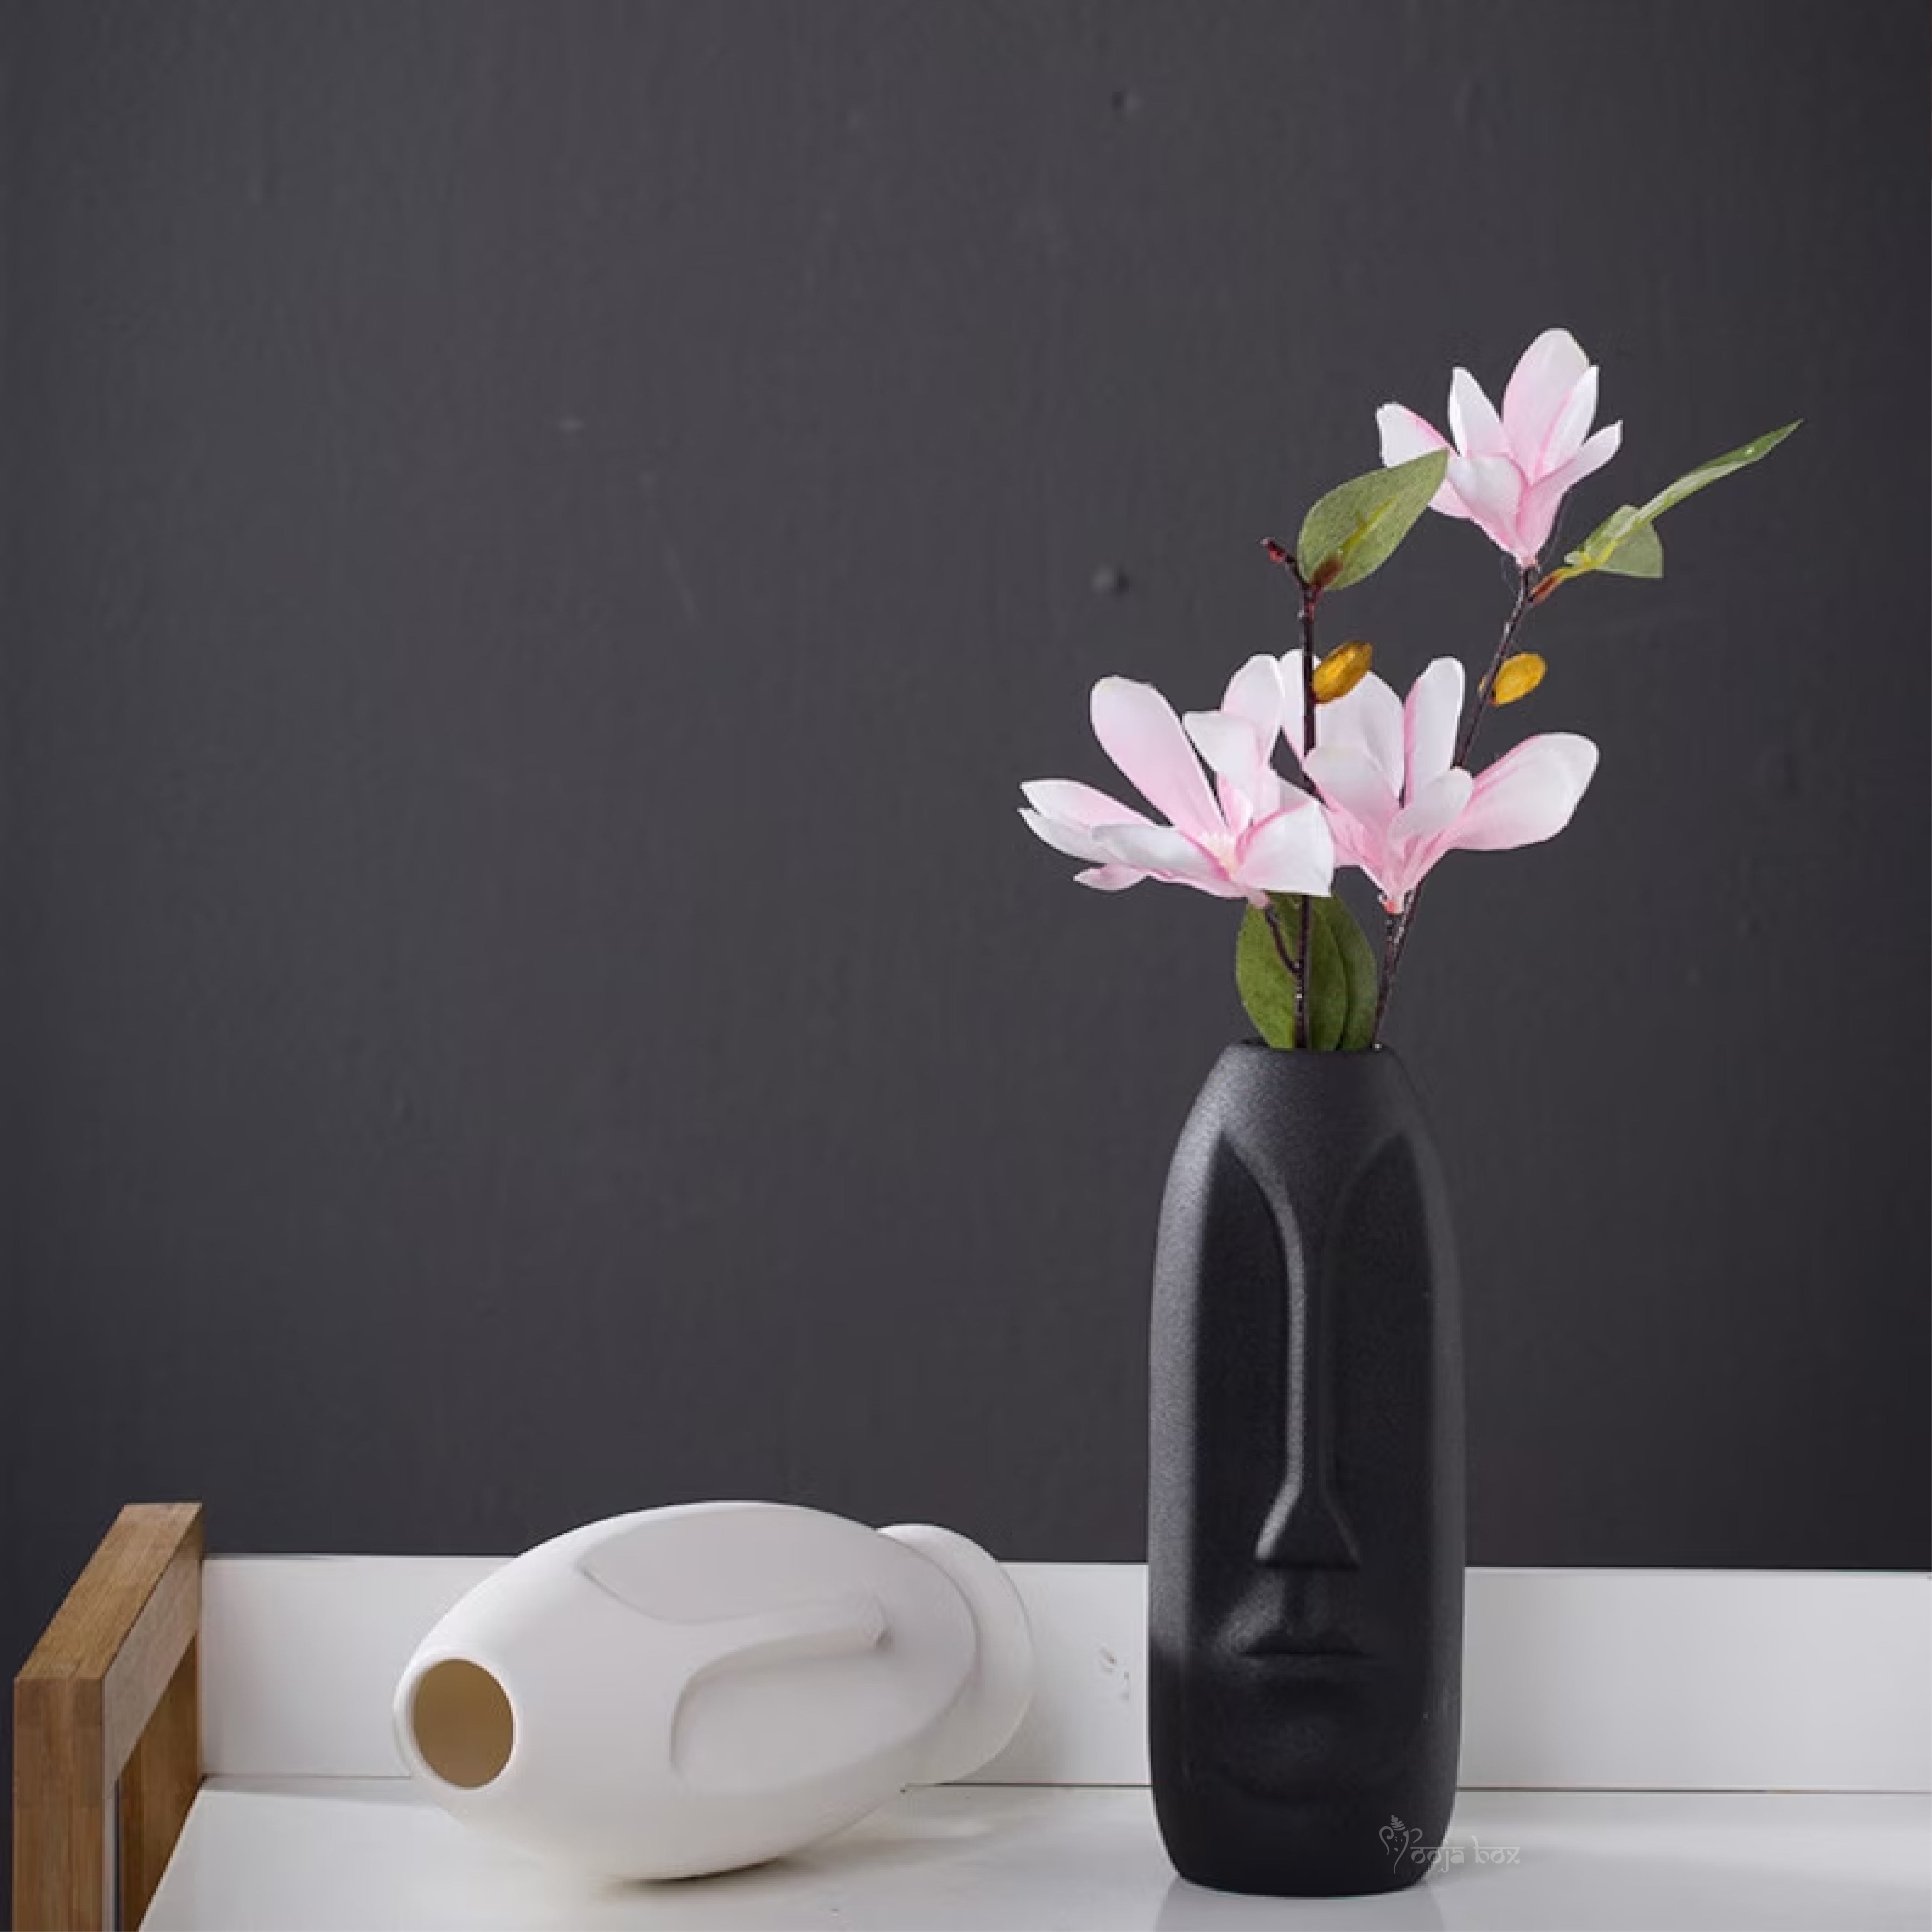 Human Face Shape Ceramic Flower Vase